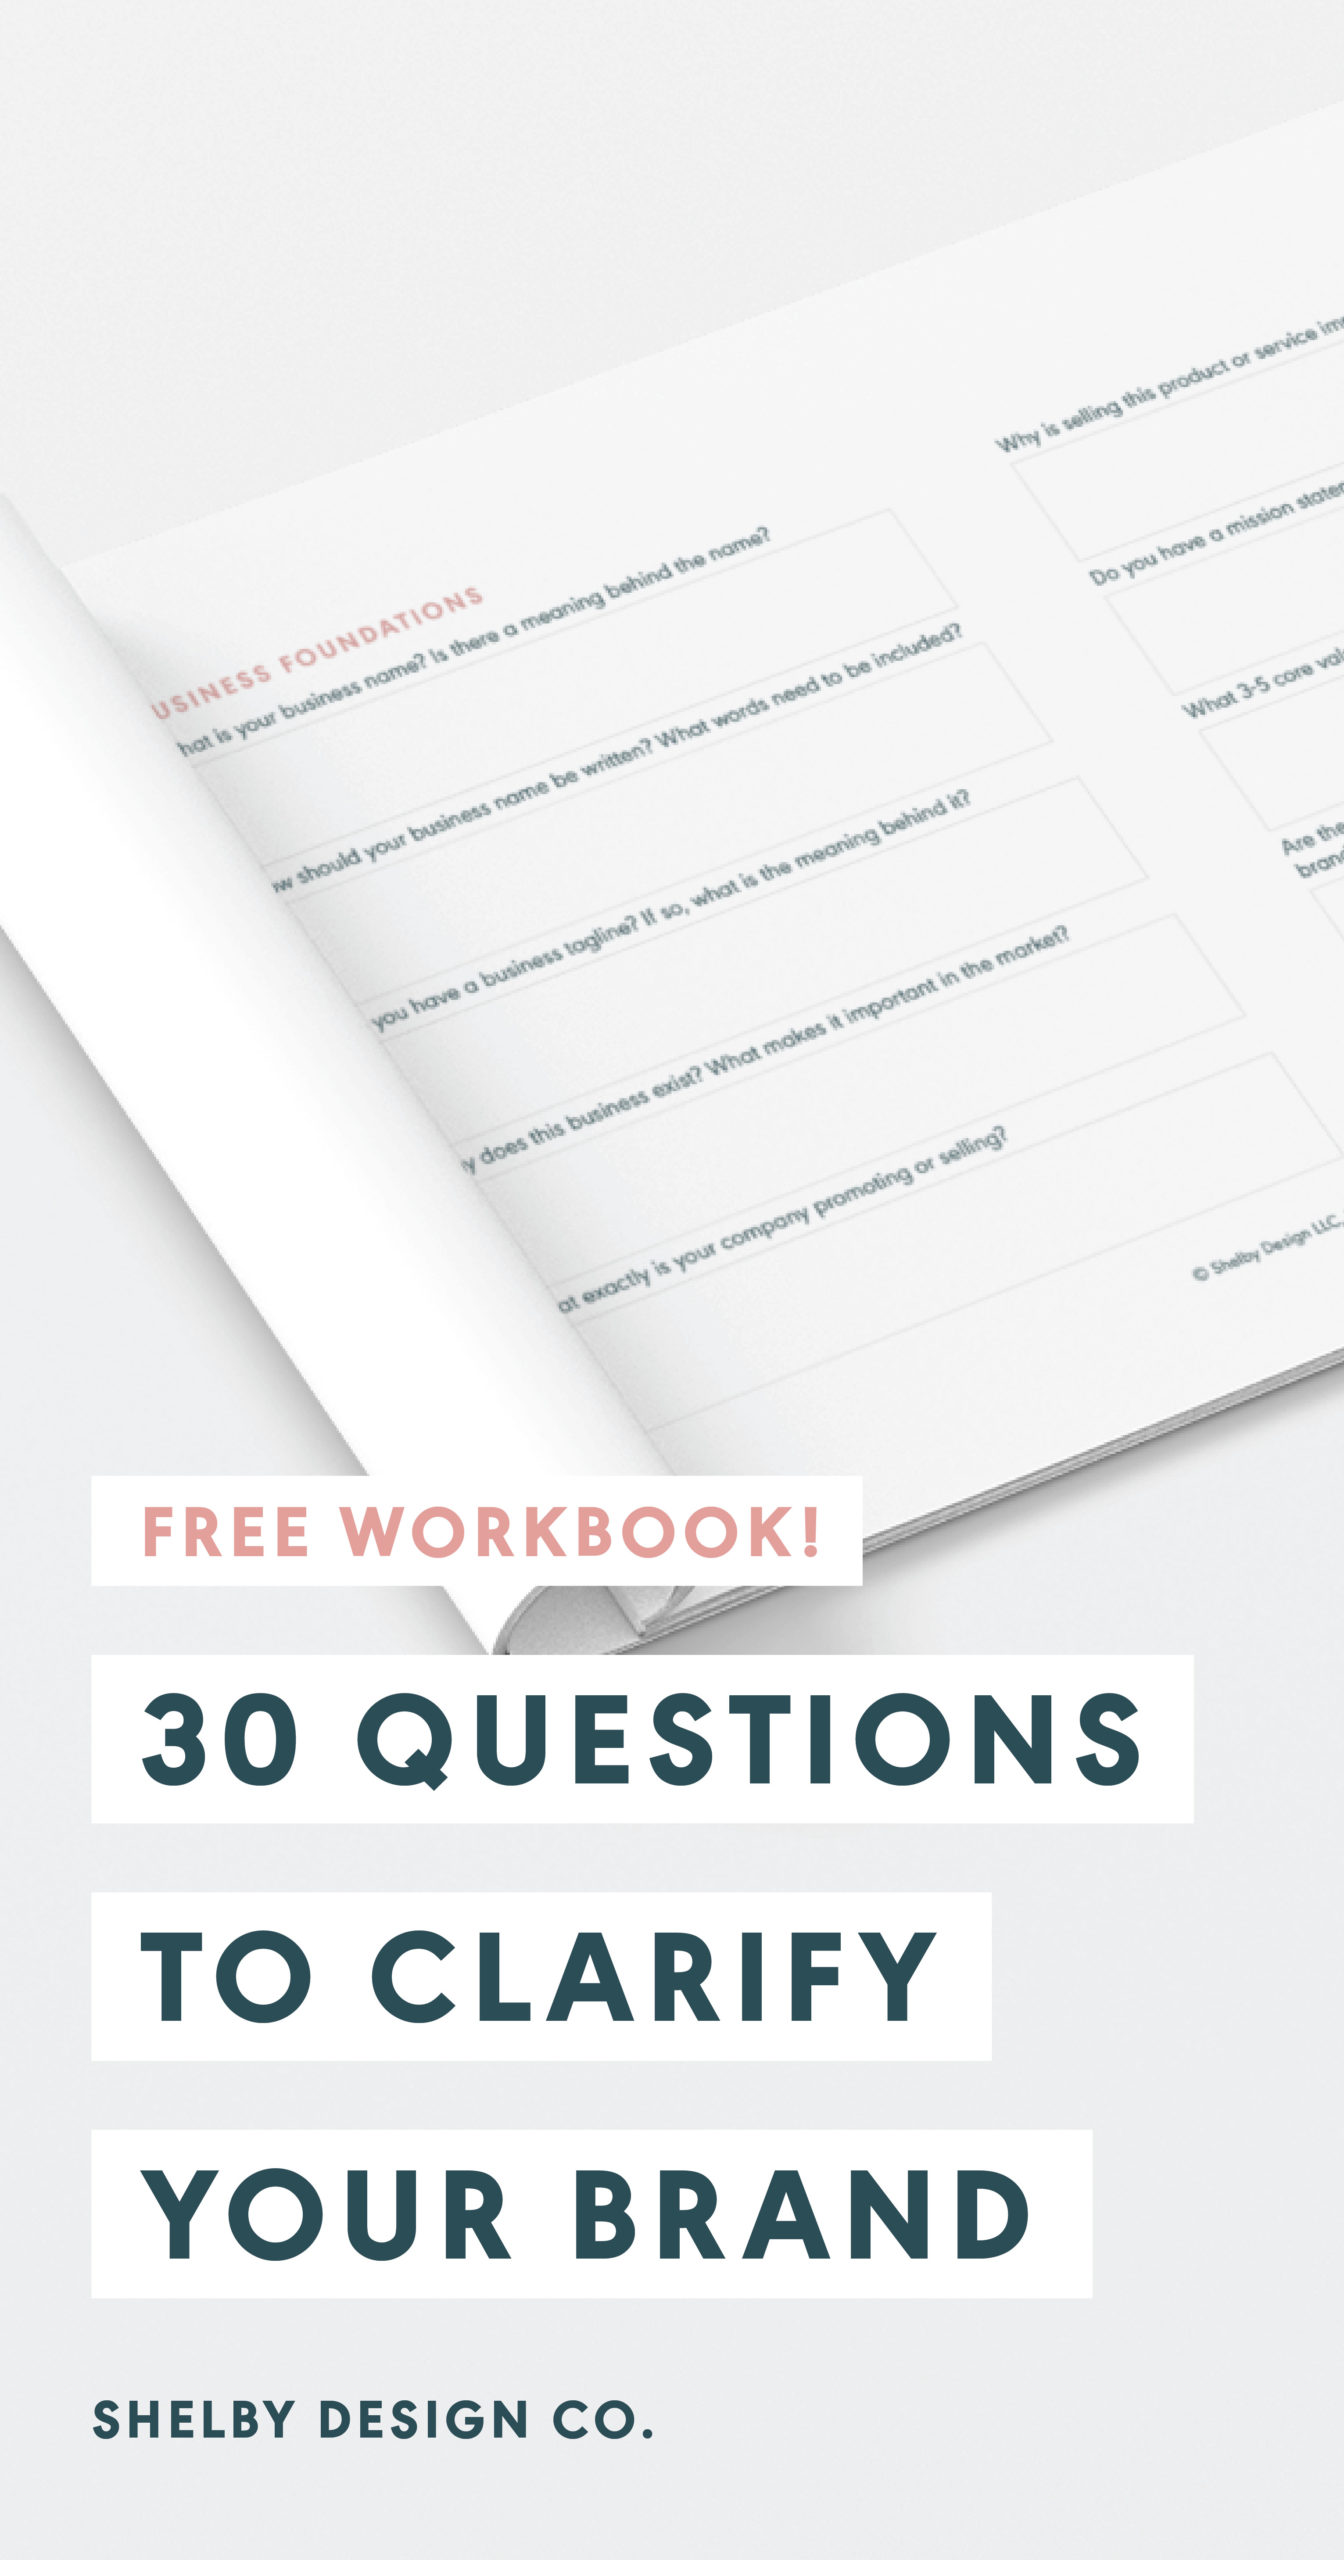 free-brand-clarity-workbook